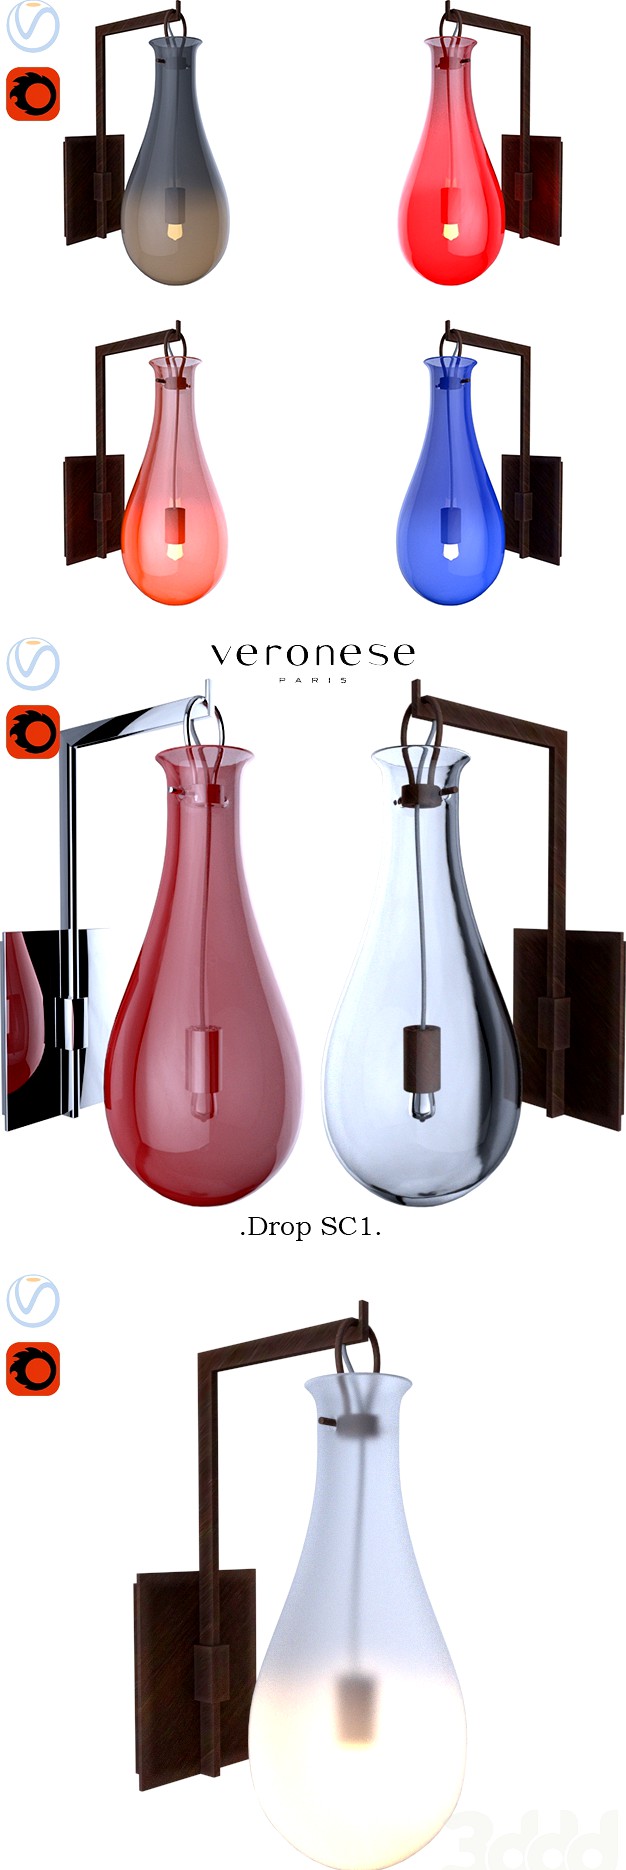 Veronese Drop SC 1